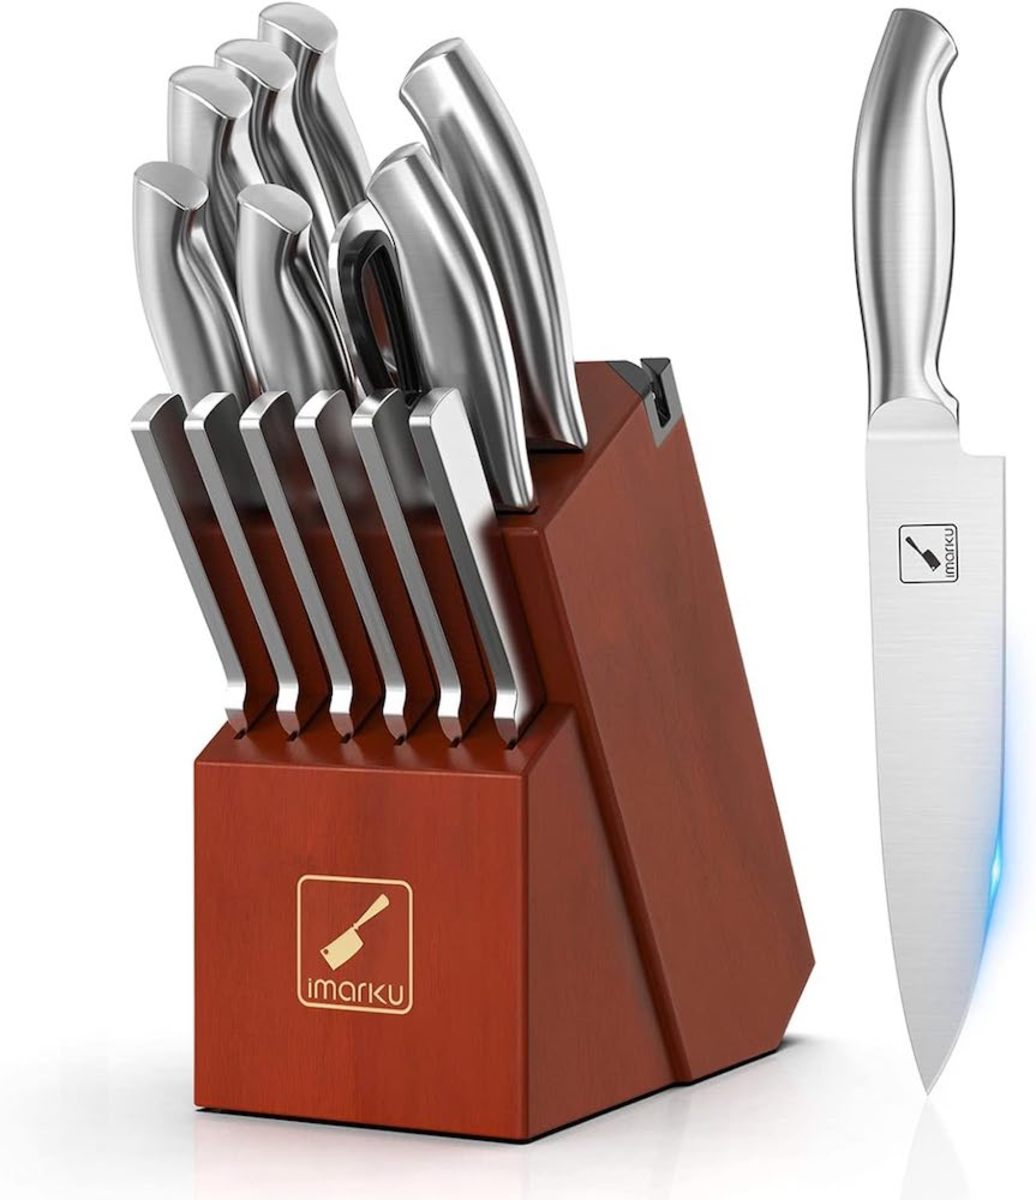 HexClad cookware sale: Save 48% on HexClad cookware, woks, knife